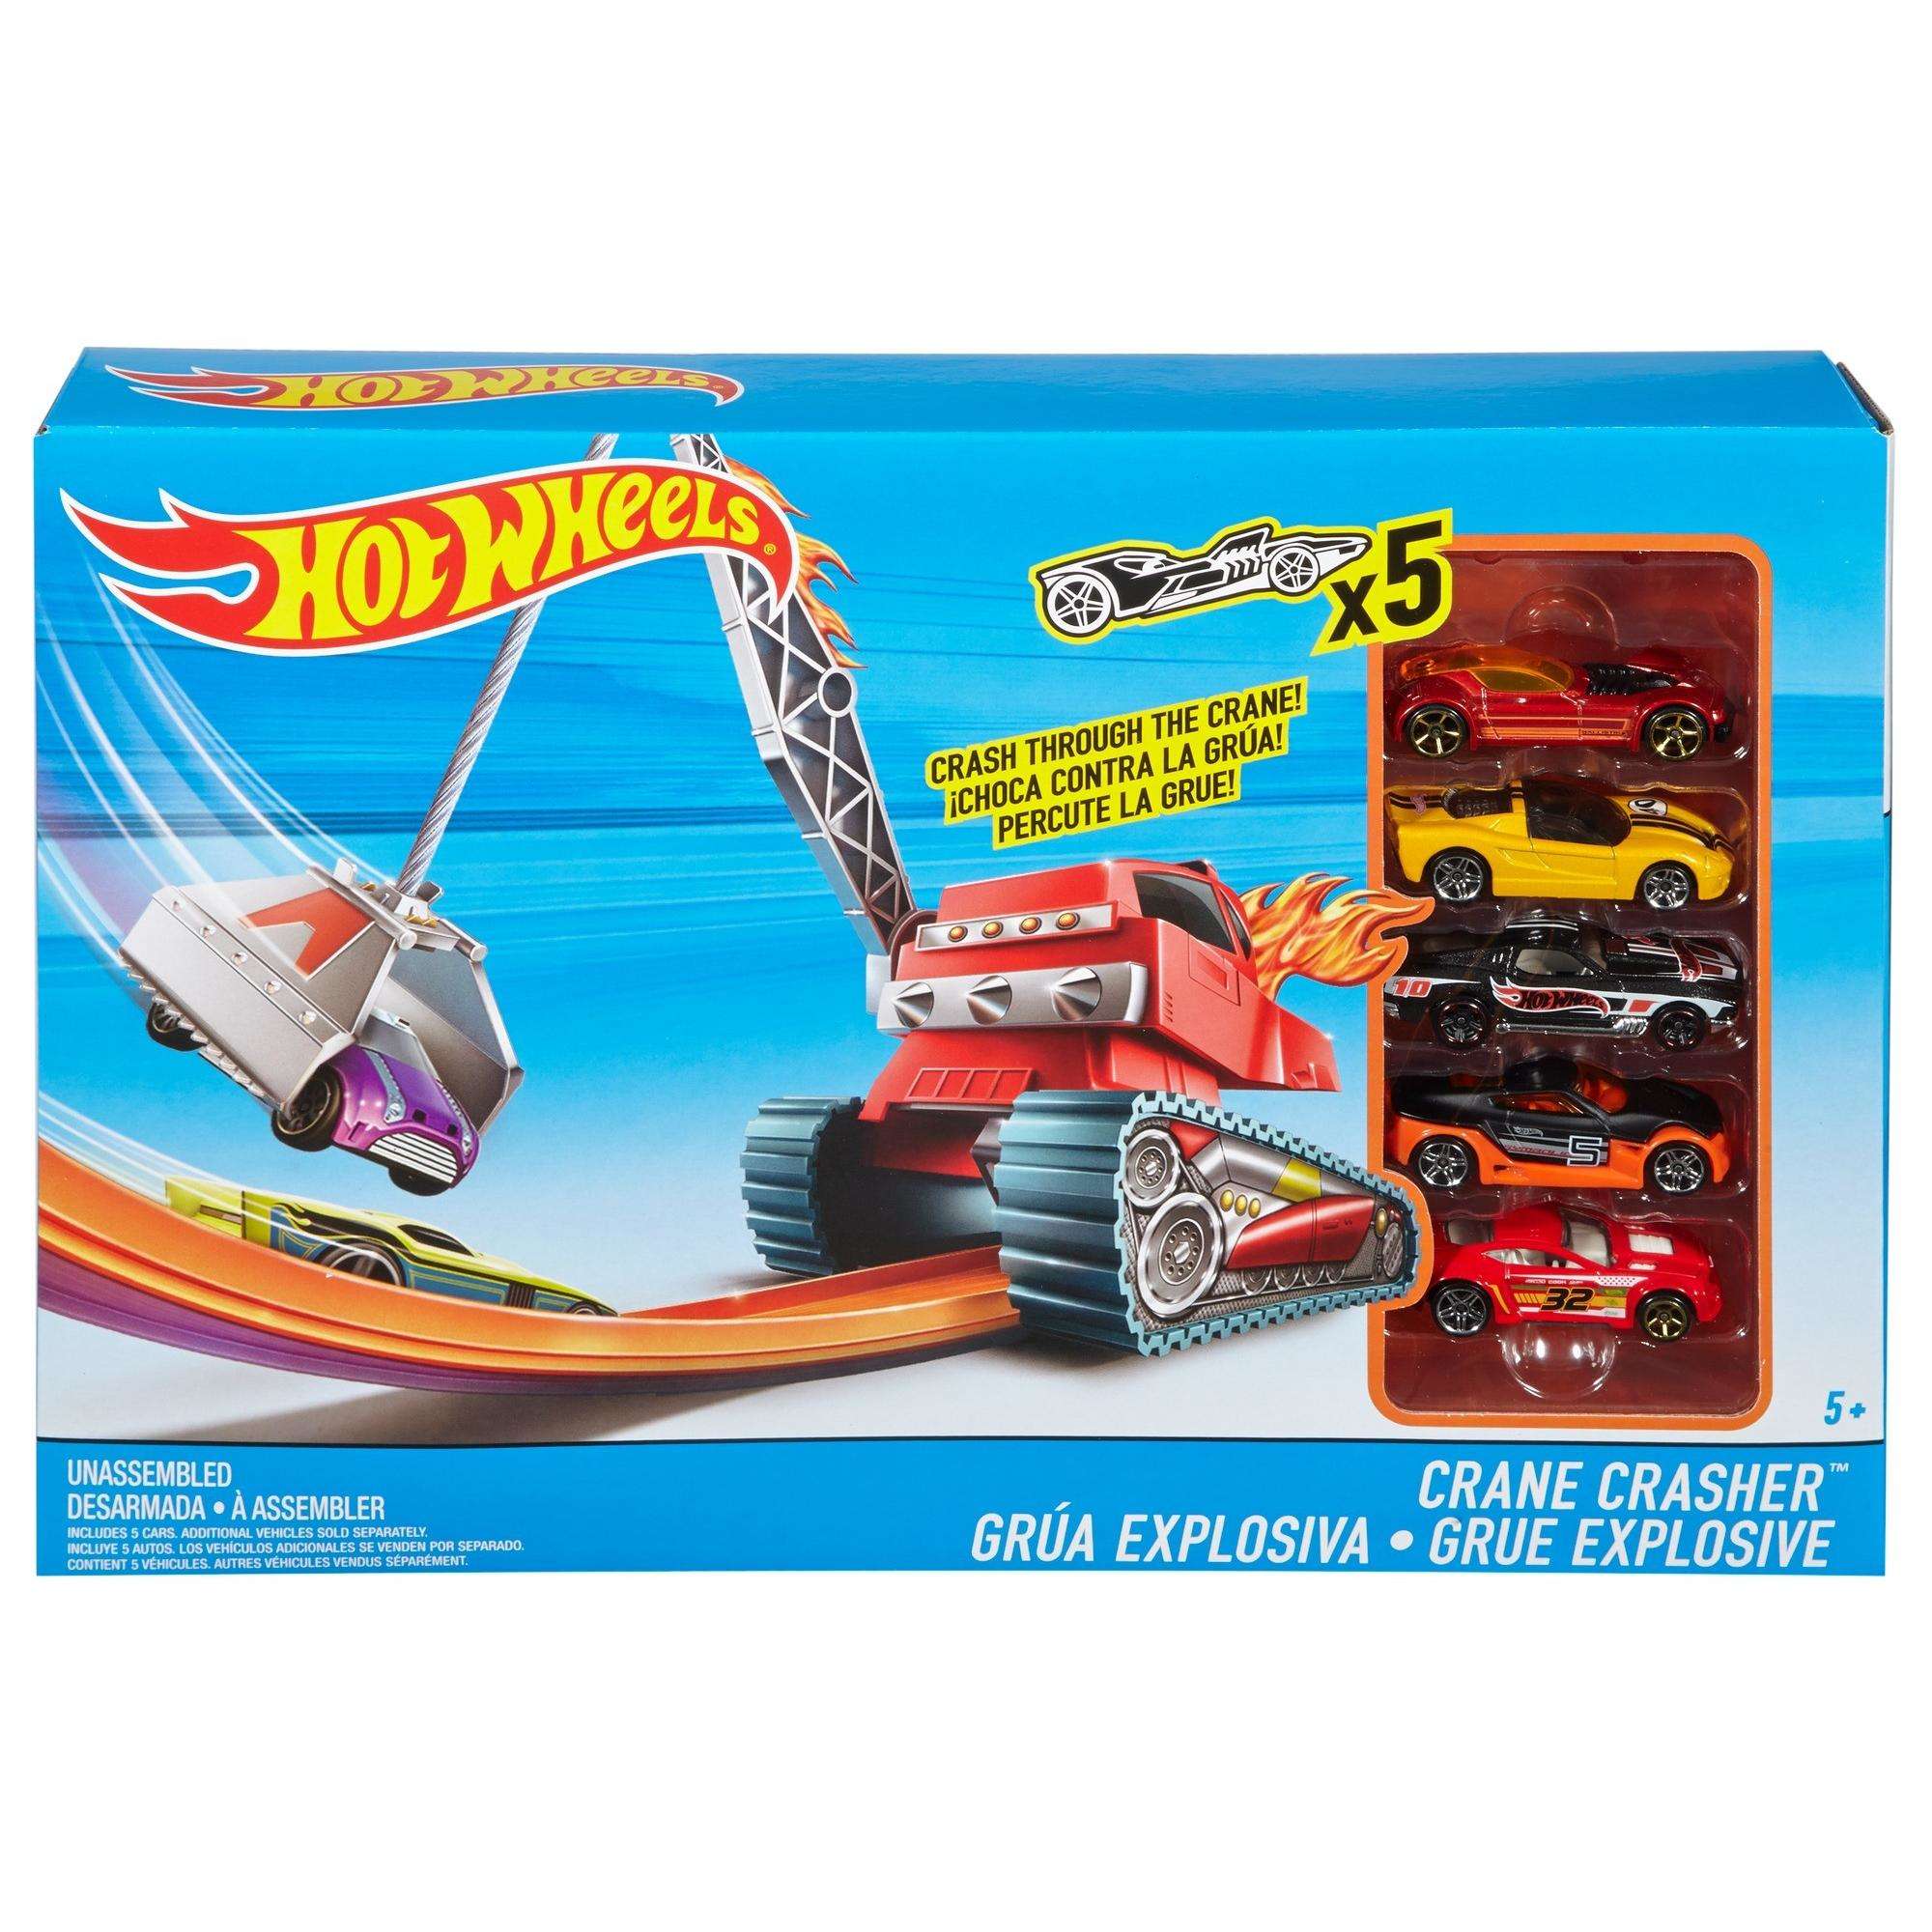 Hot Wheels Crane Crasher Play Set with 5 Racing Vehicles - image 3 of 4